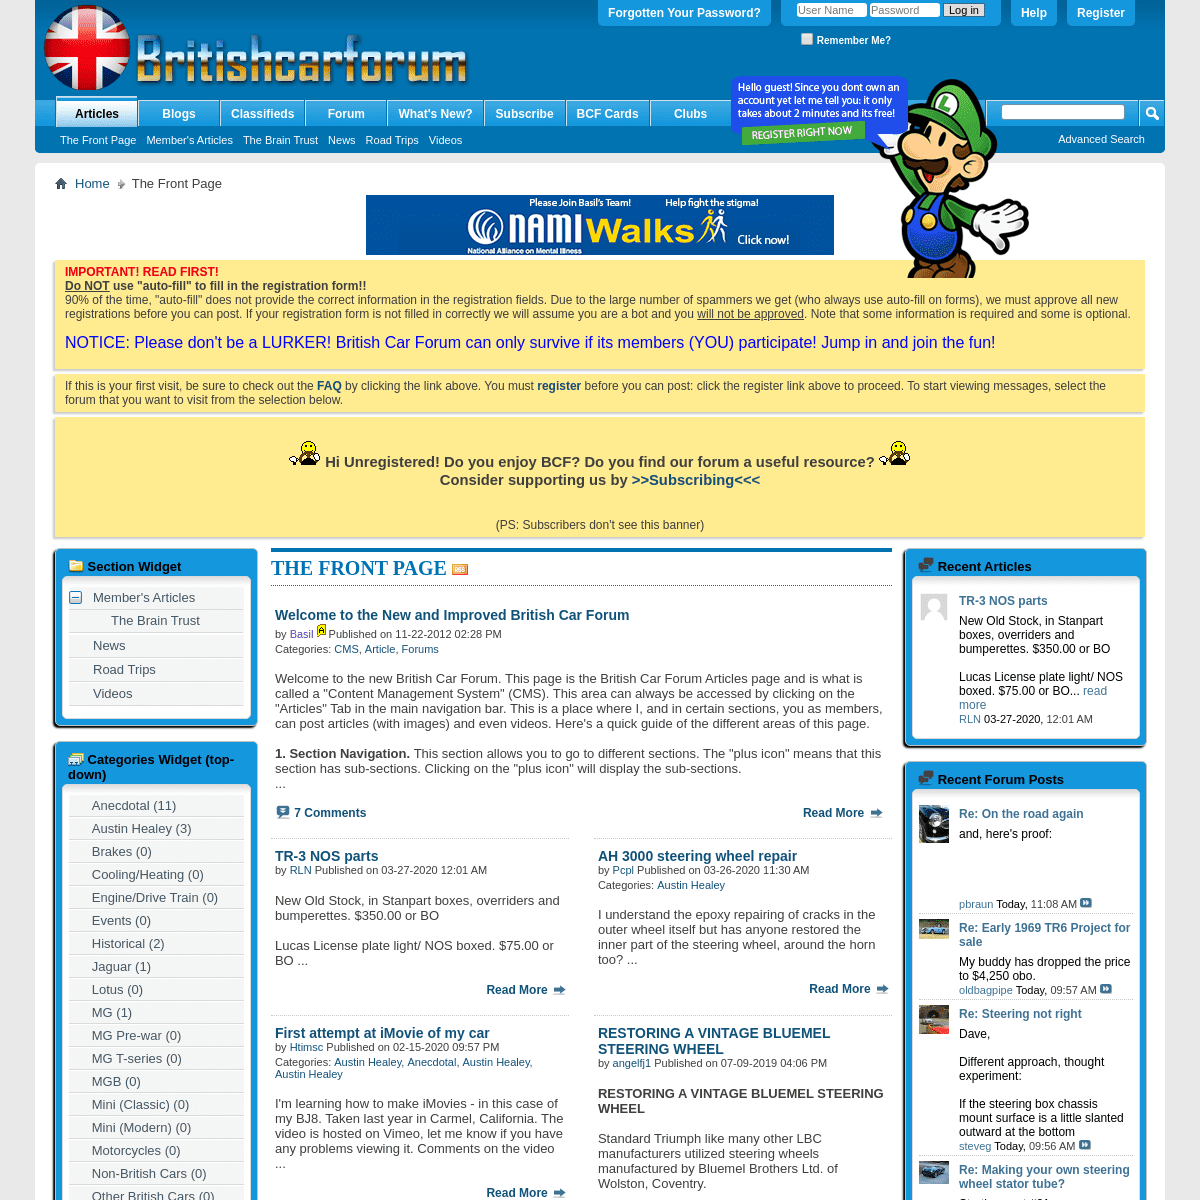 A complete backup of britishcarforum.com